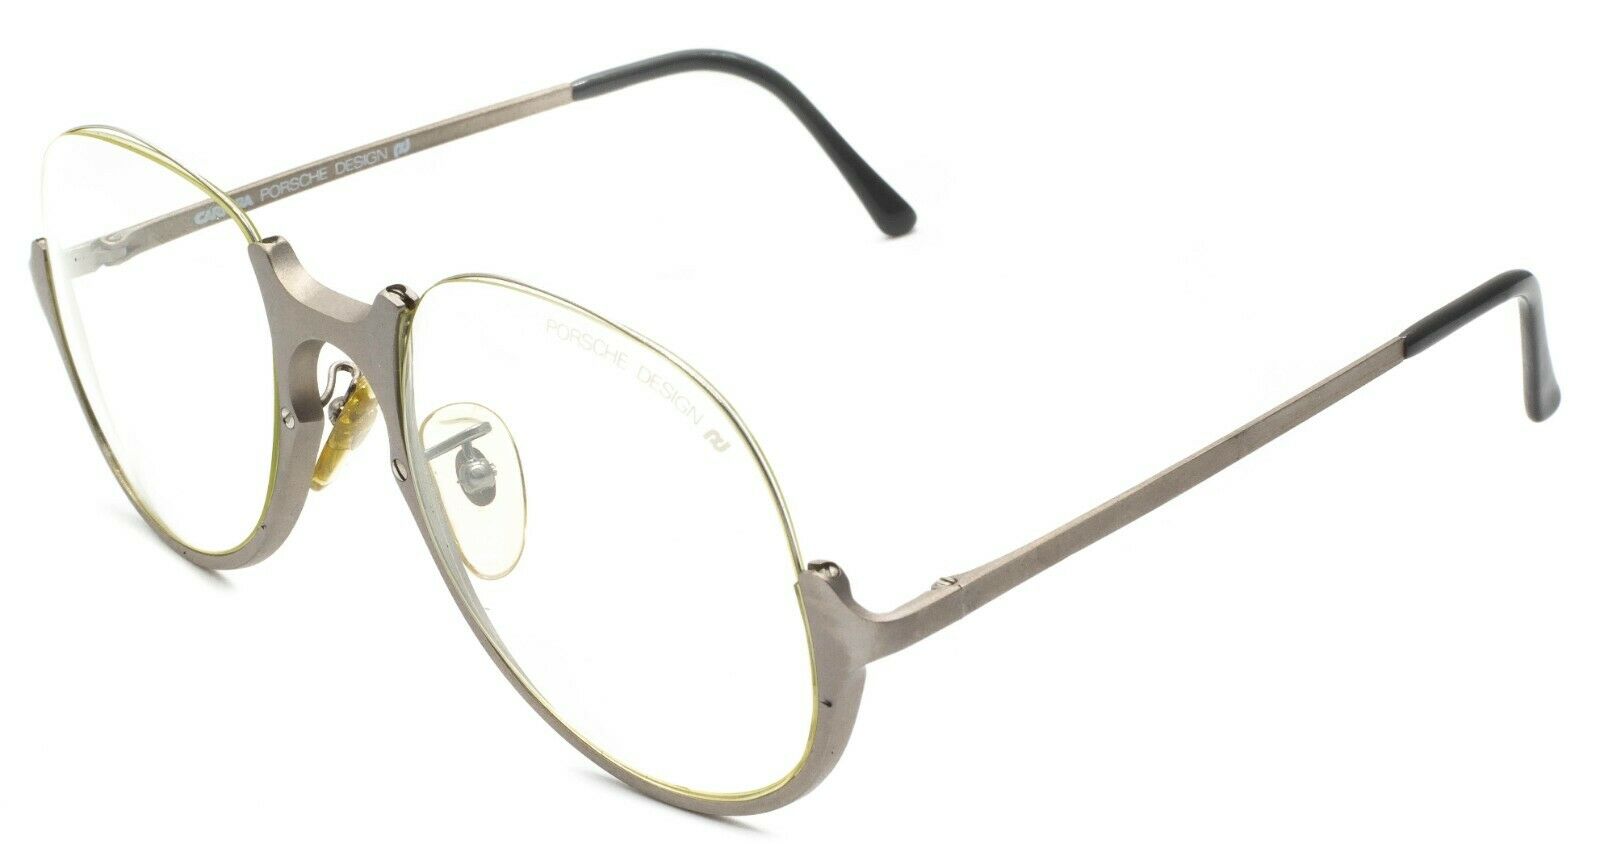 PORSCHE DESIGN 5650 70 54mm Eyewear RX Optical Glasses Eyeglasses NOS - Austria